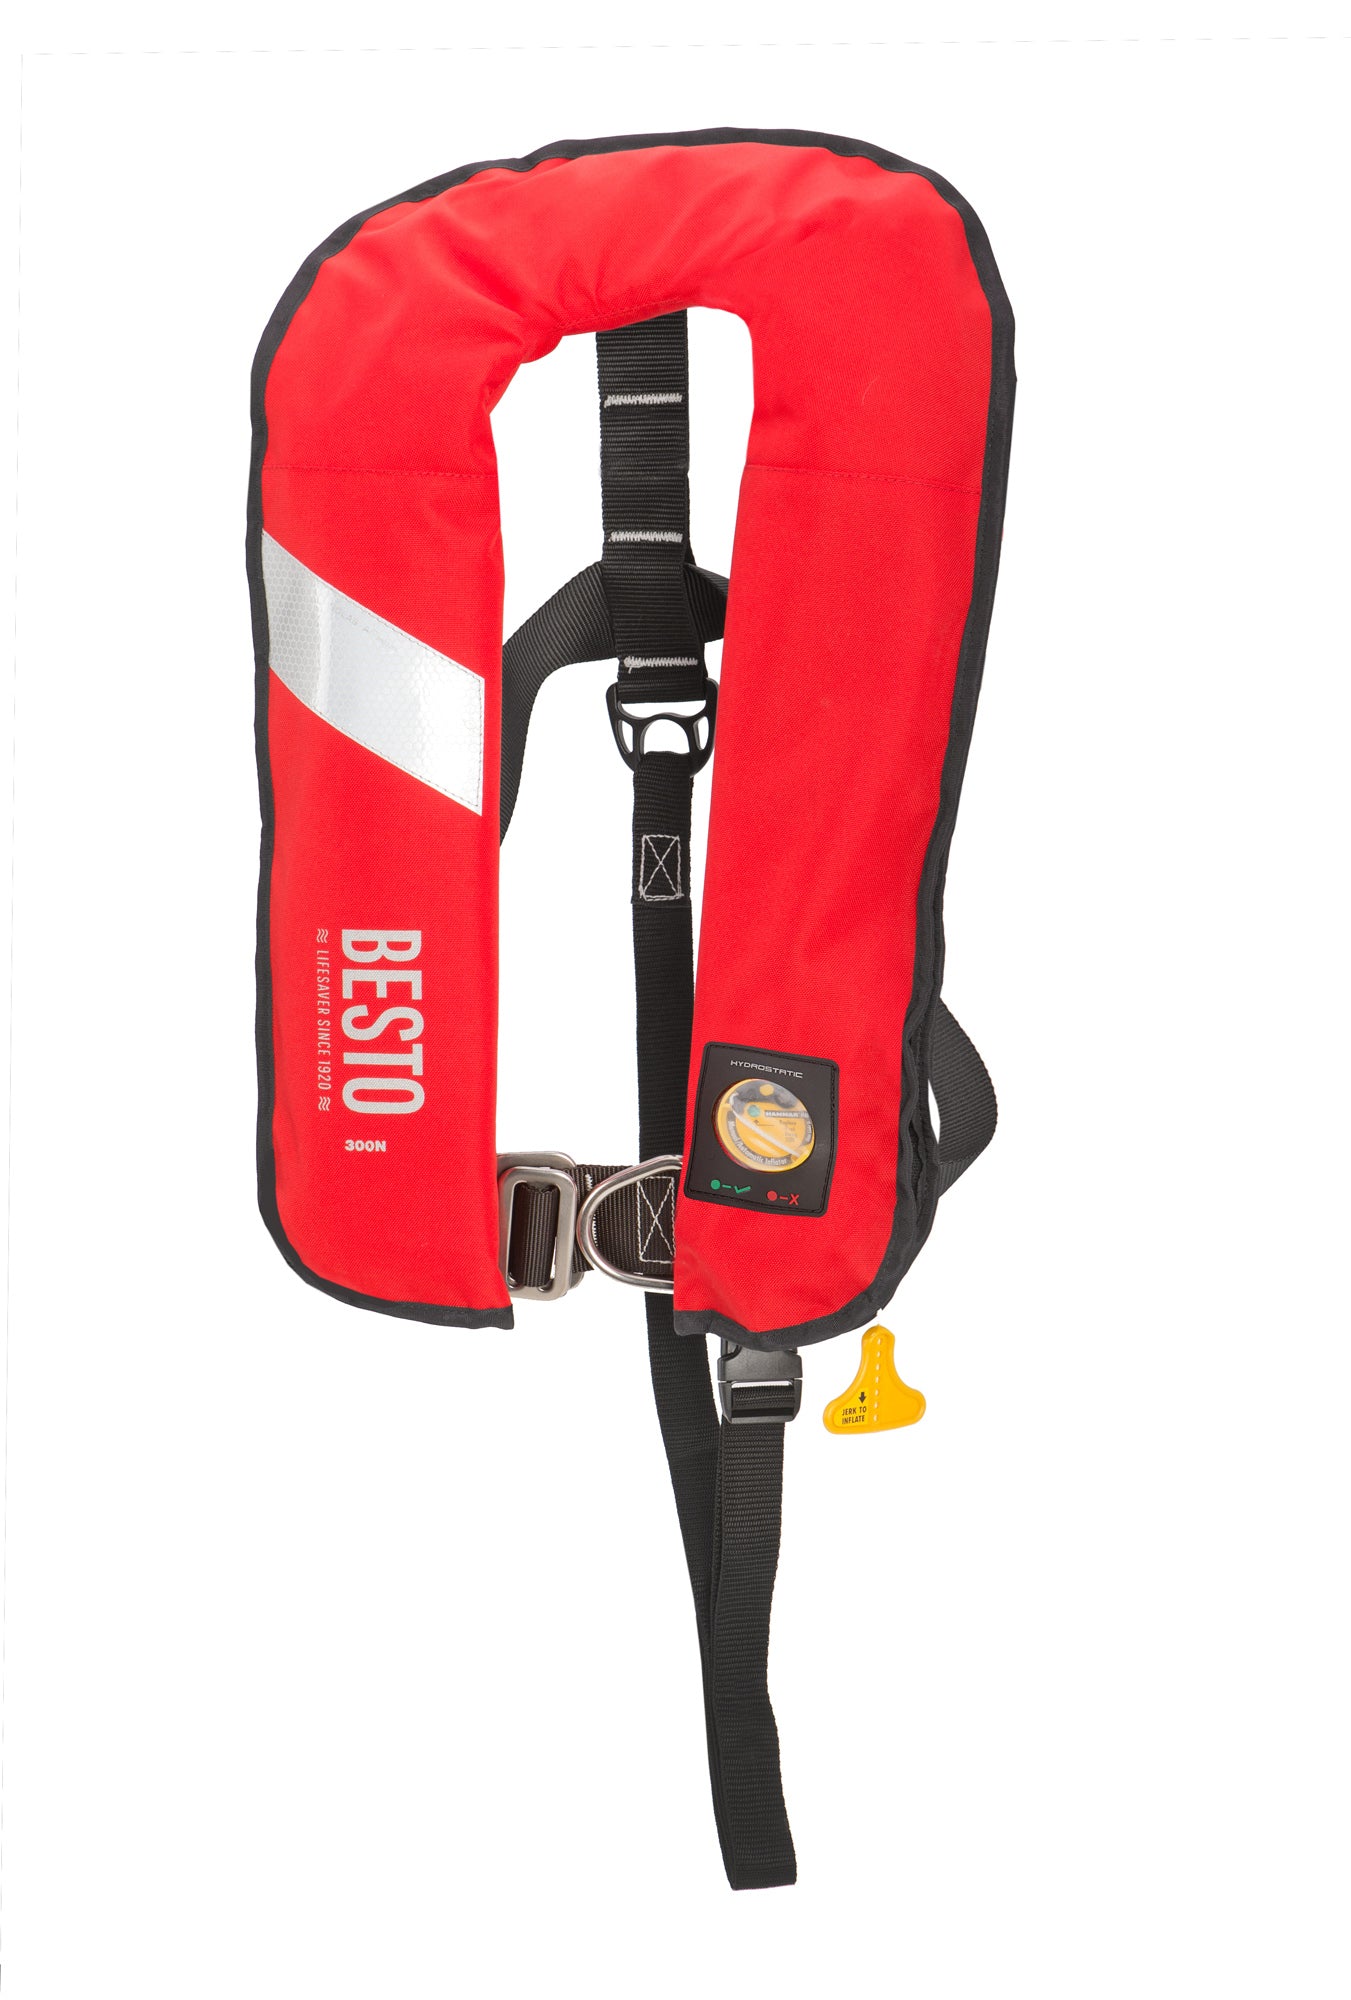 Besto Inflatable Automatic 300N Hammar Inflatable Lifejacket 300N 40+kg Red Adult